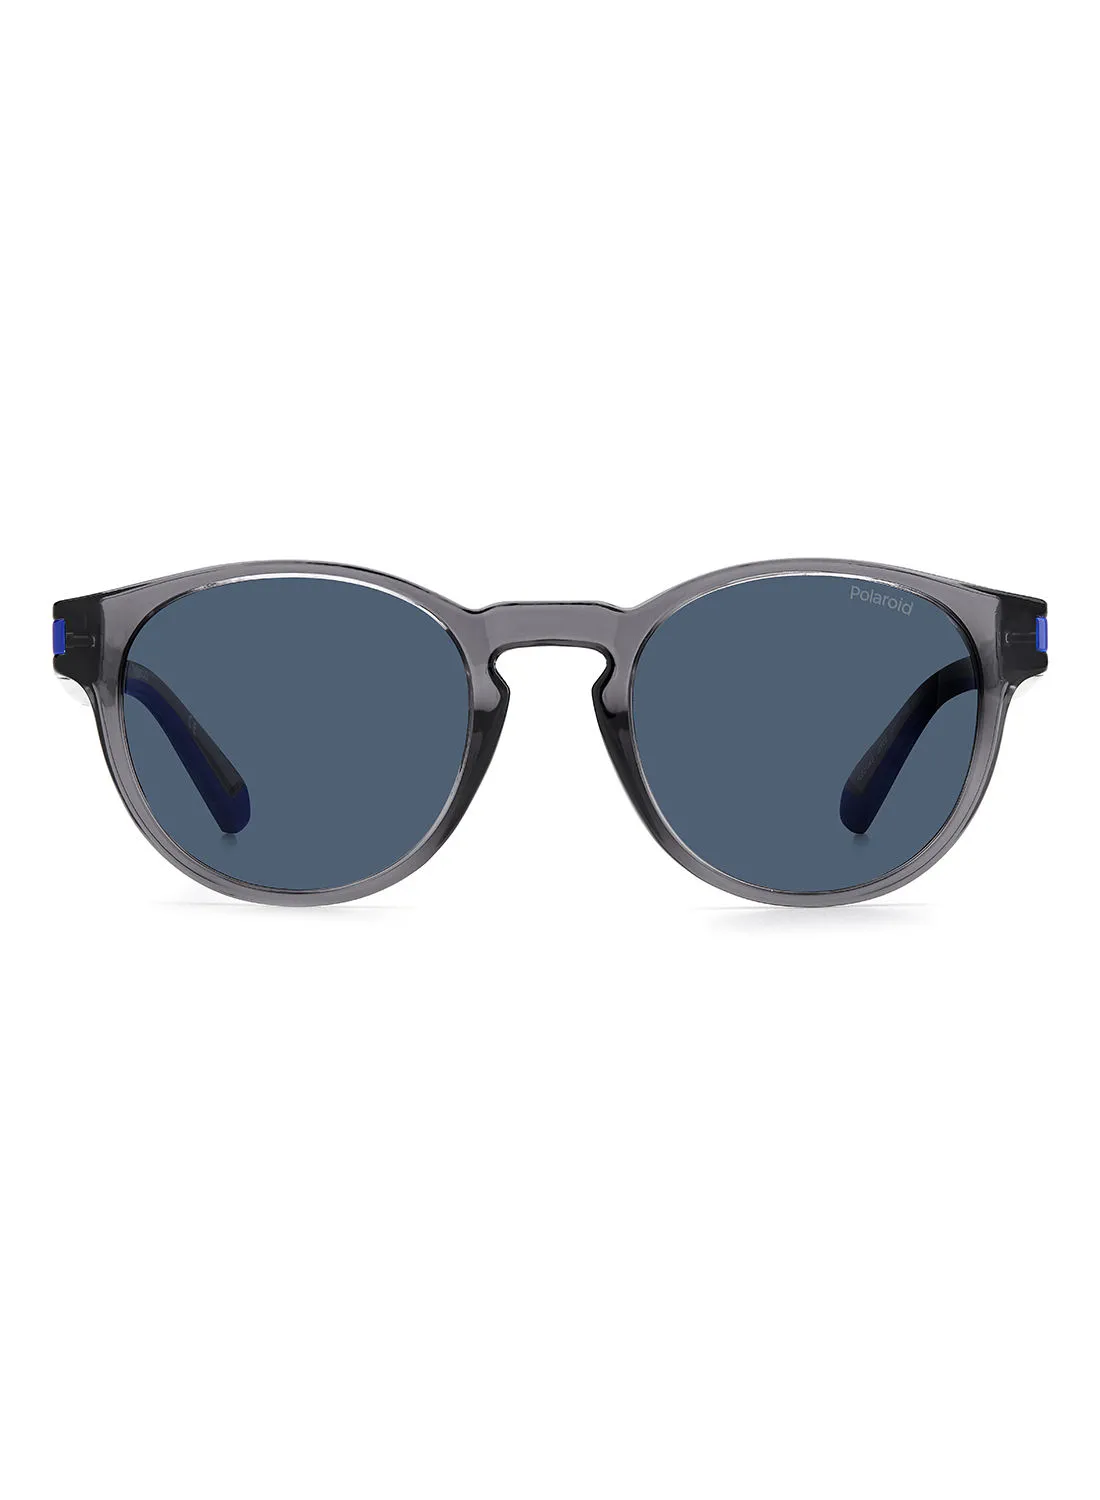 Polaroid Round / Oval  Sunglasses PLD 2124/S  GREY BLUE 50